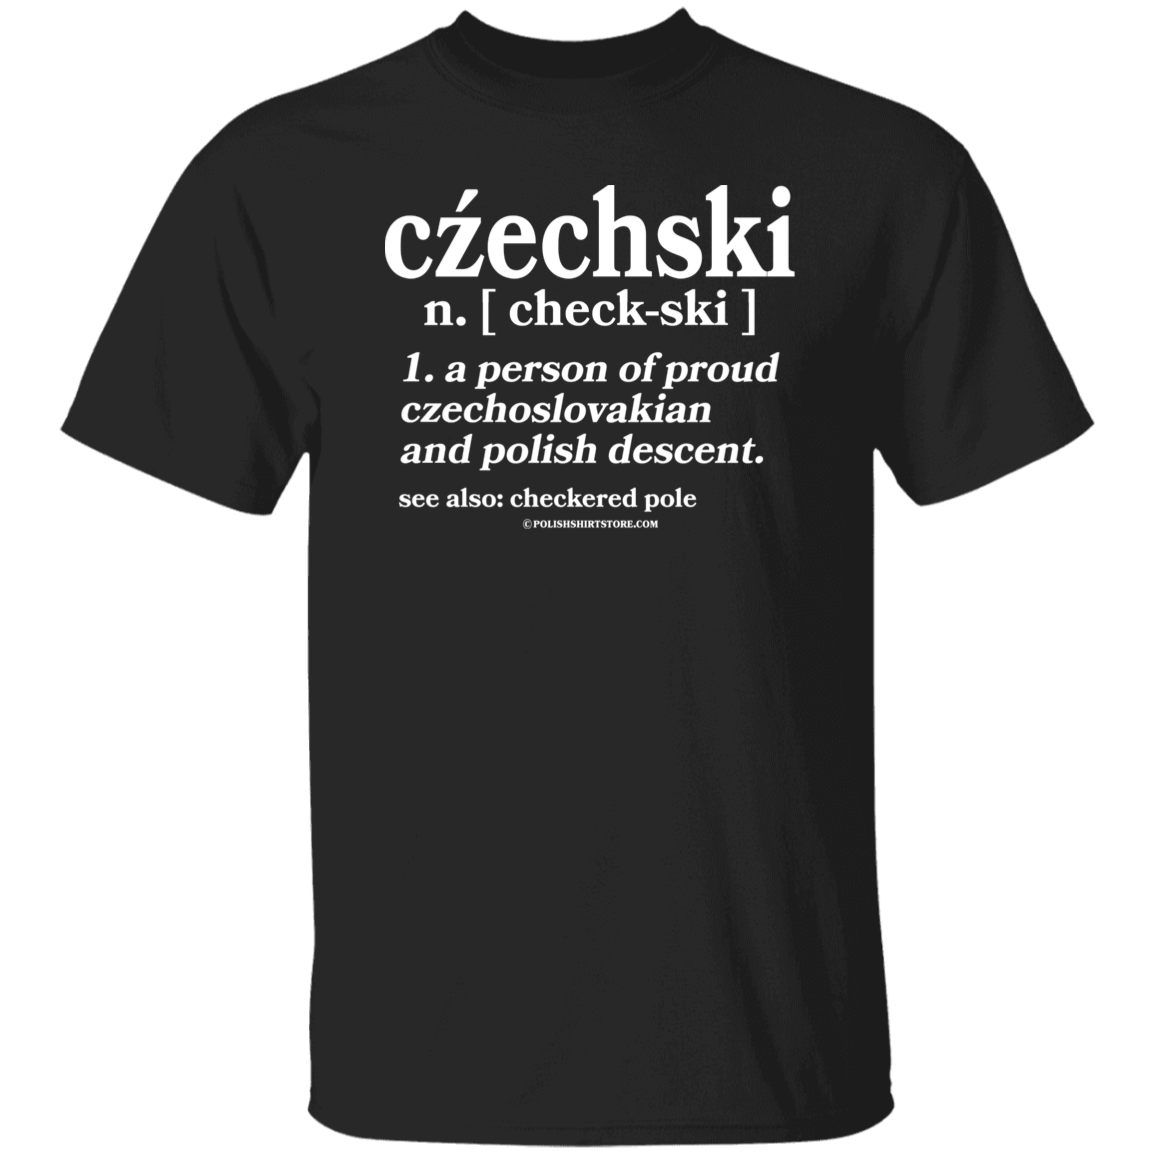 Checkski A Person Of Czechoslovakian Polish Descent Apparel CustomCat G500 5.3 oz. T-Shirt Black S